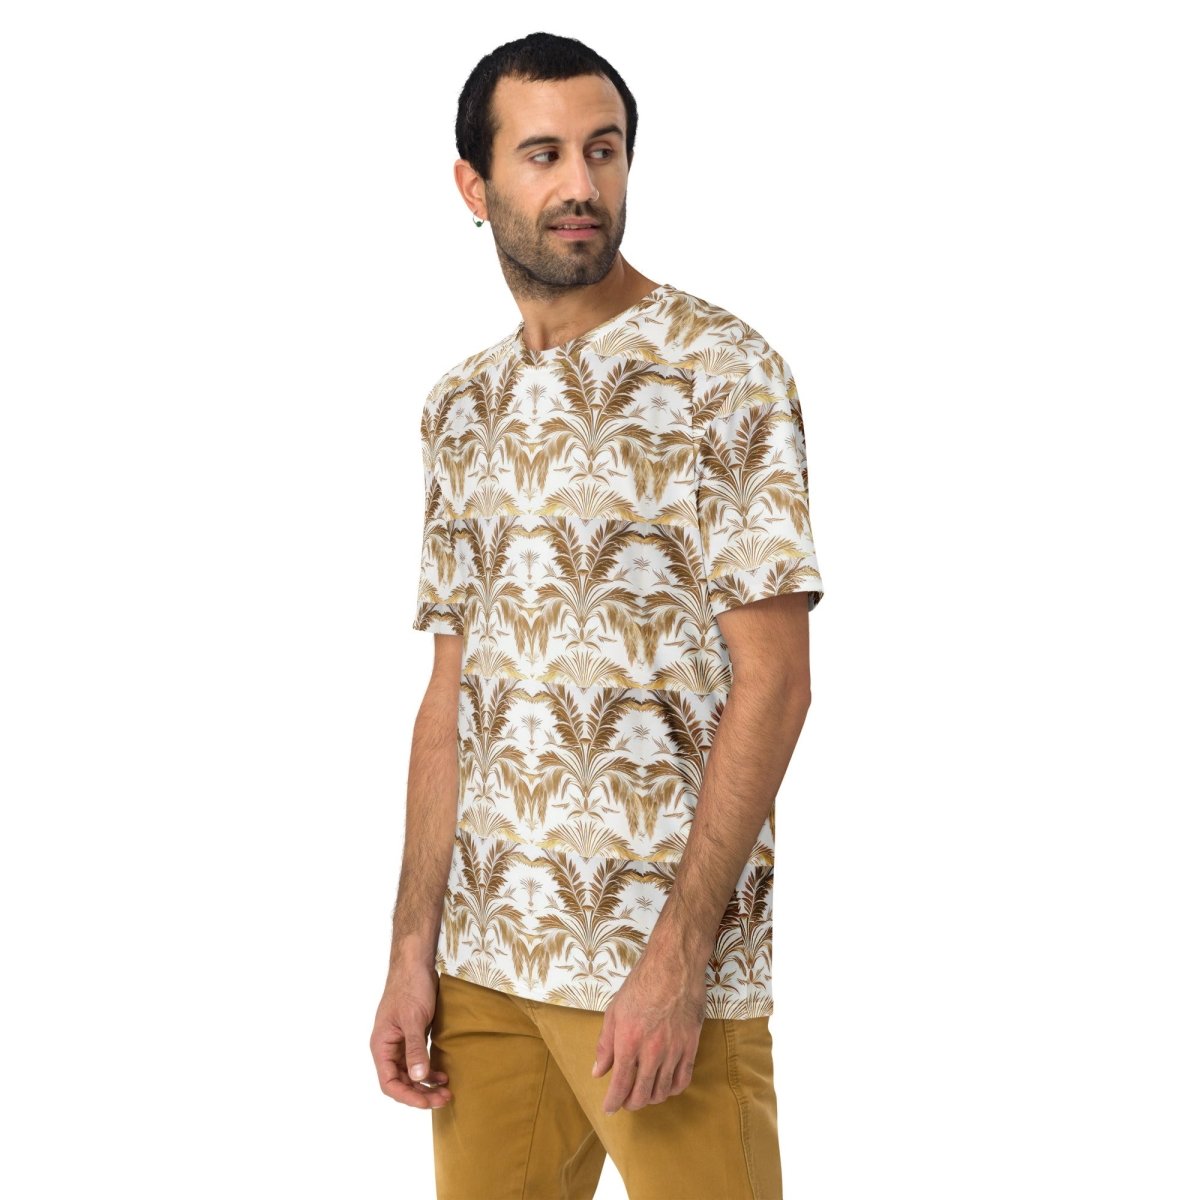 Sefira Summer Festival Men's t-shirt | Sefira Beach Collection Man - Sefira Collections